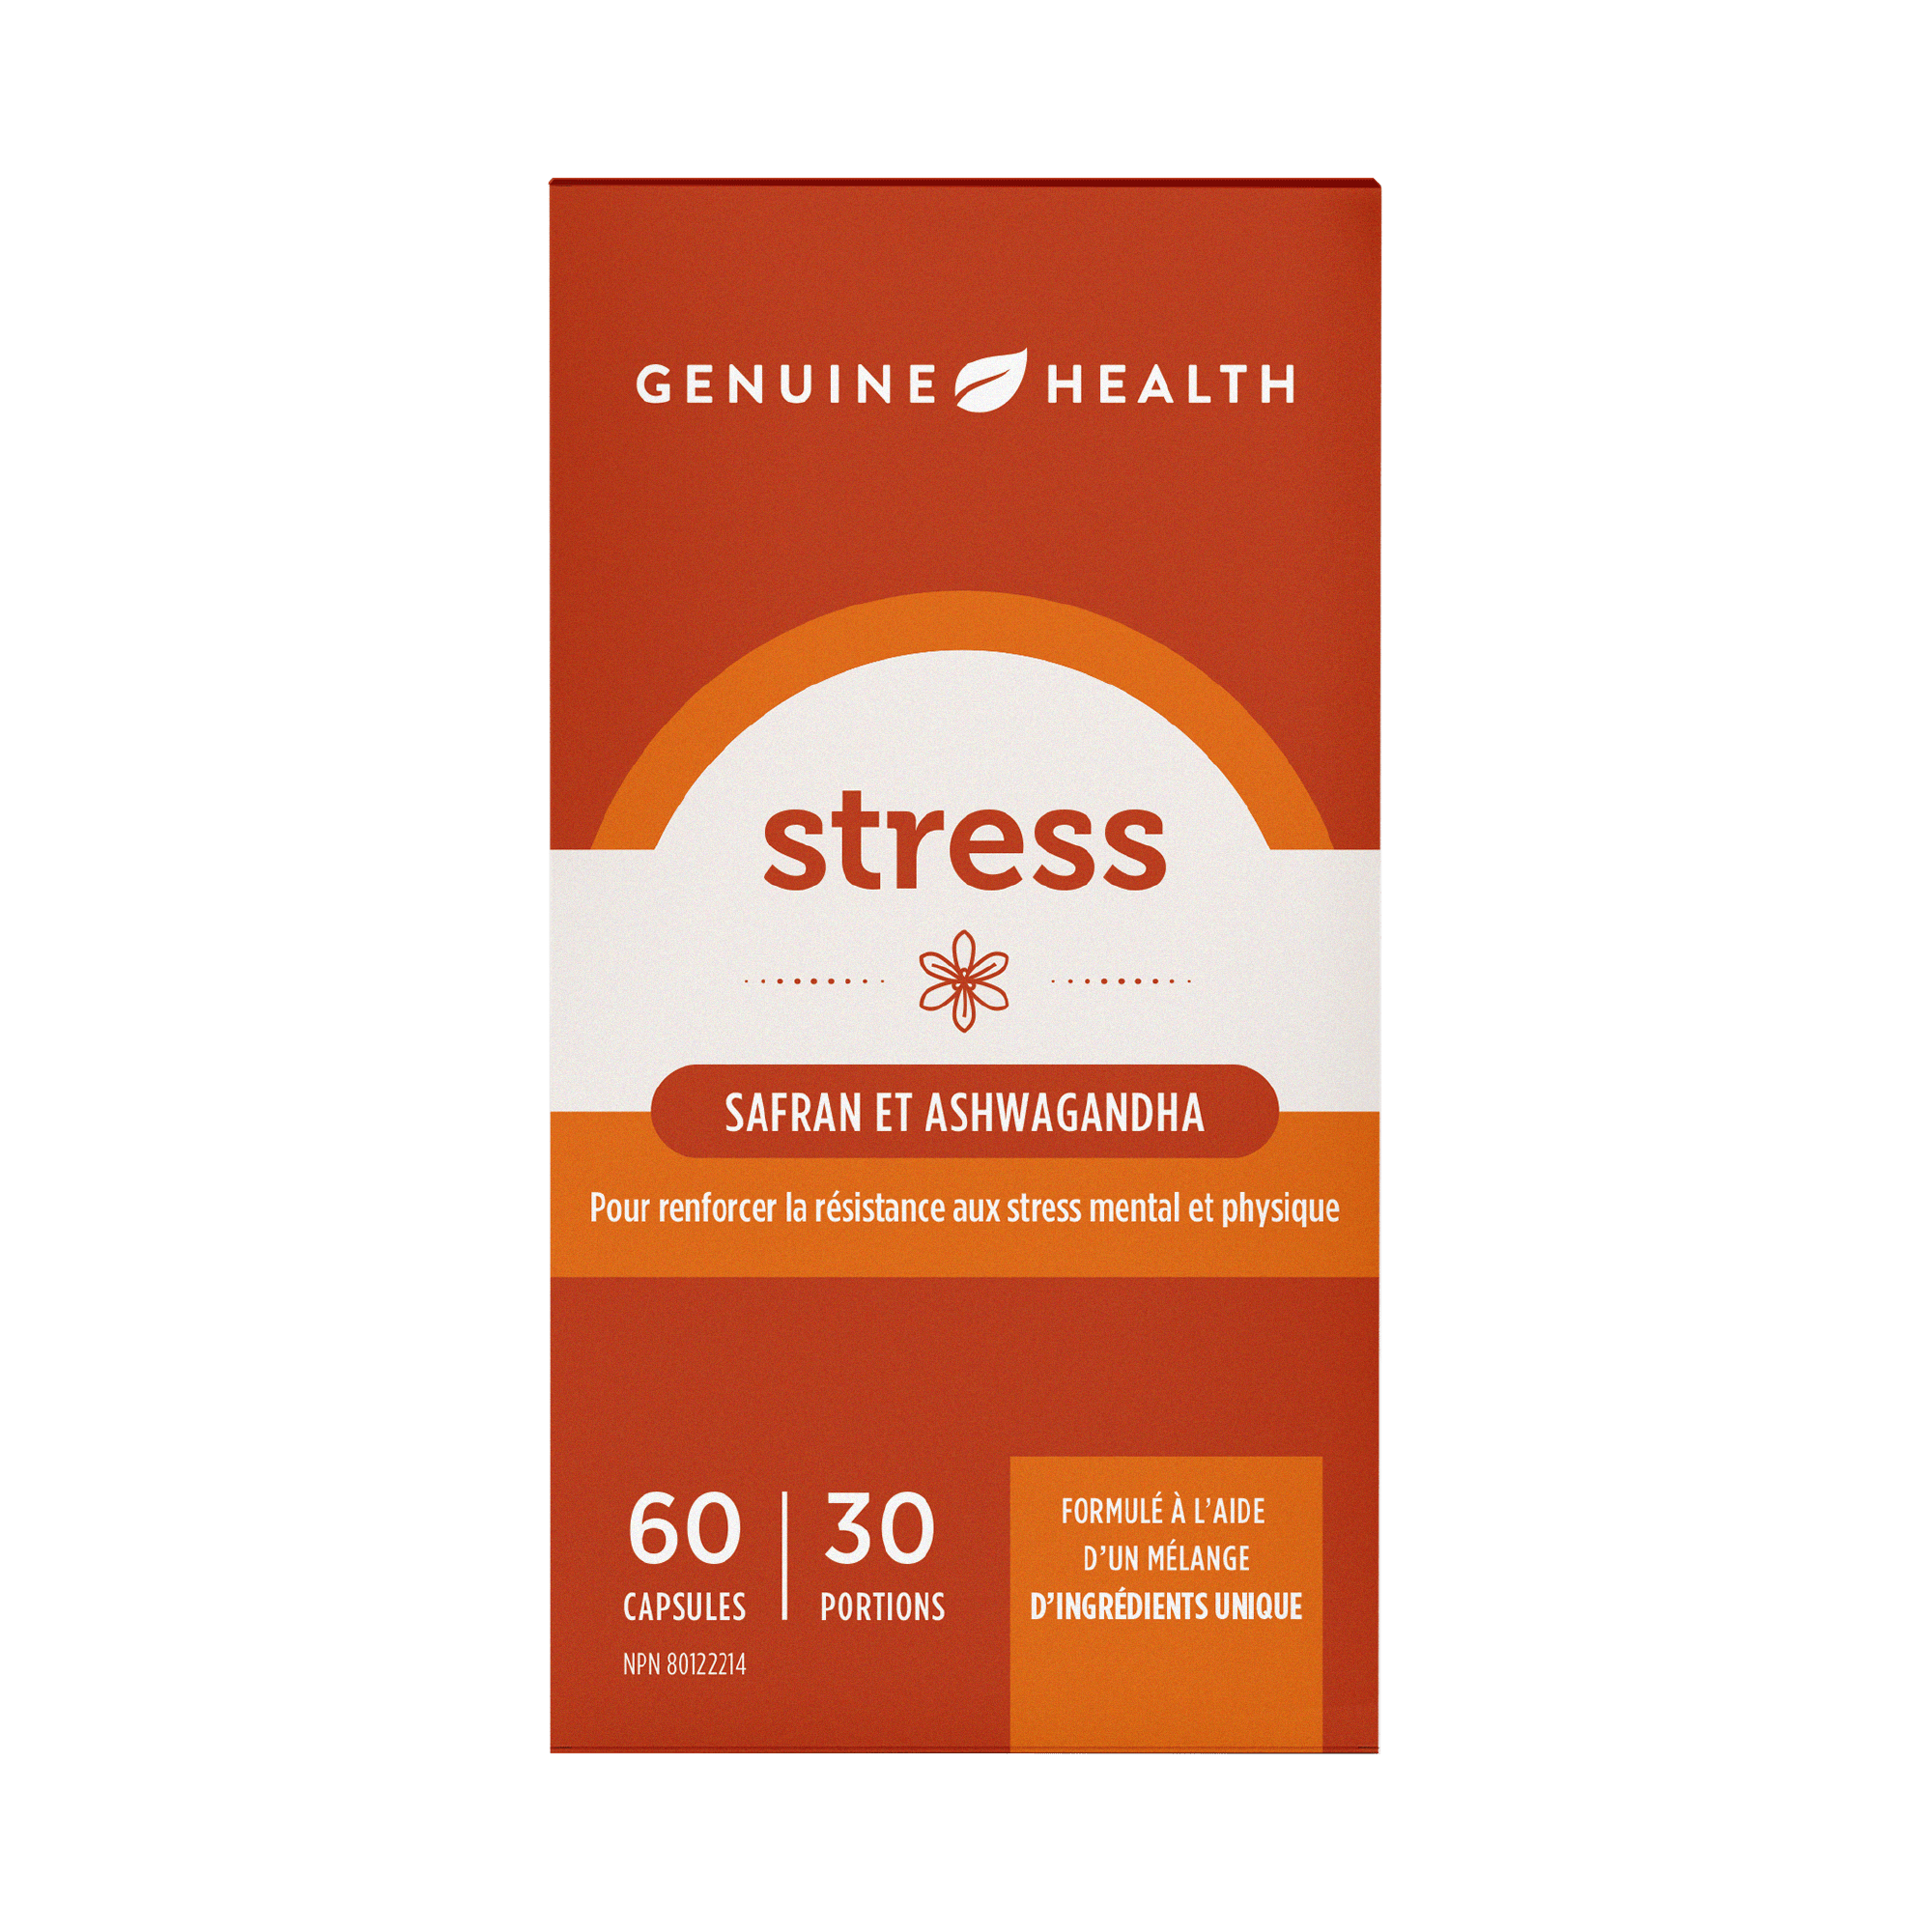 GENUINE HEALTH Suppléments Stress (safran et ashwagandha) 60caps